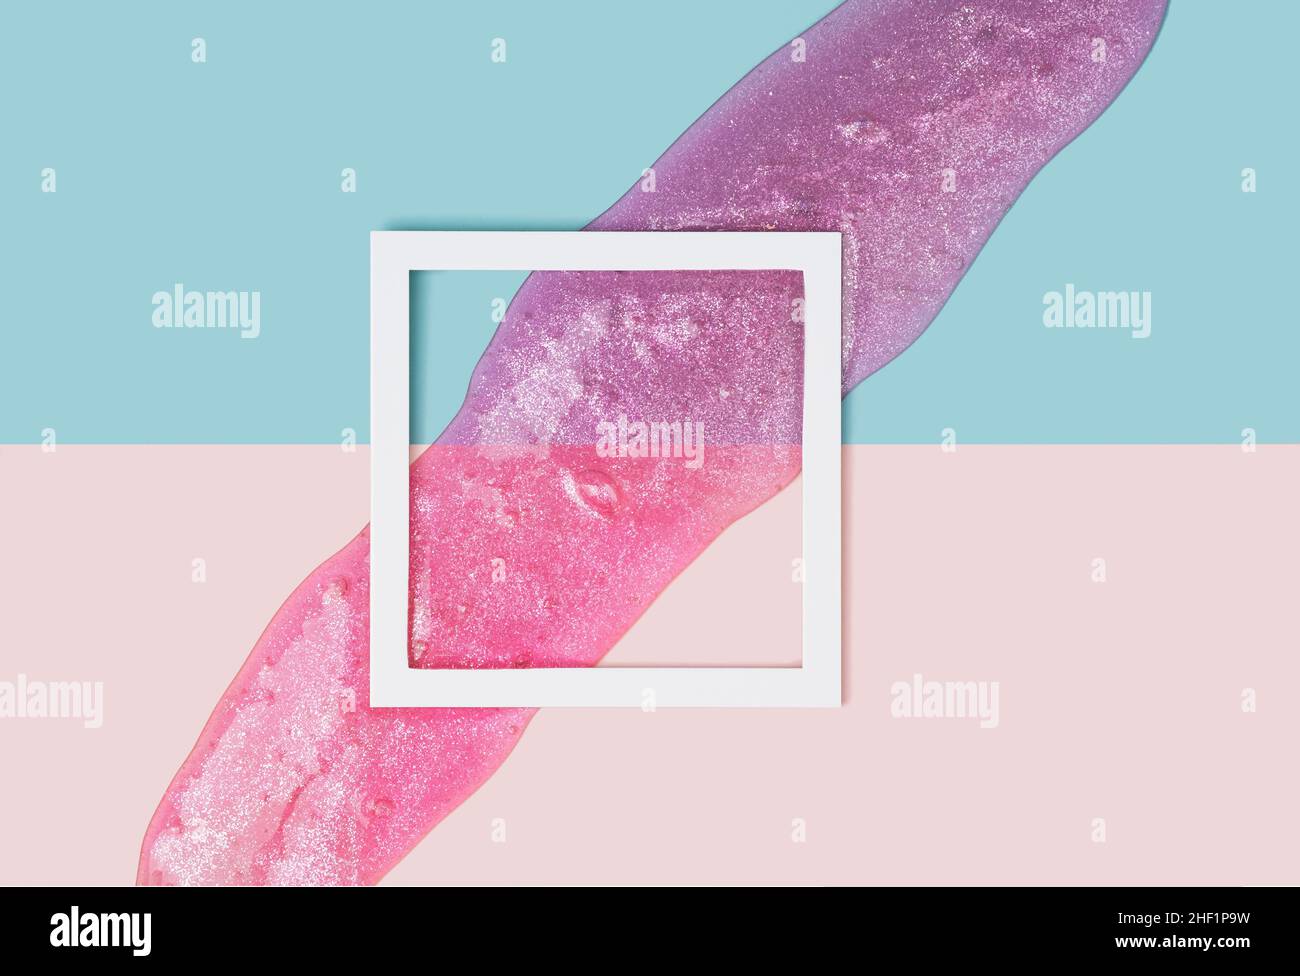 Square frame on a two tone pastel background and violet glitter slime. Futuristic, retro conceptual backdrop. Stock Photo